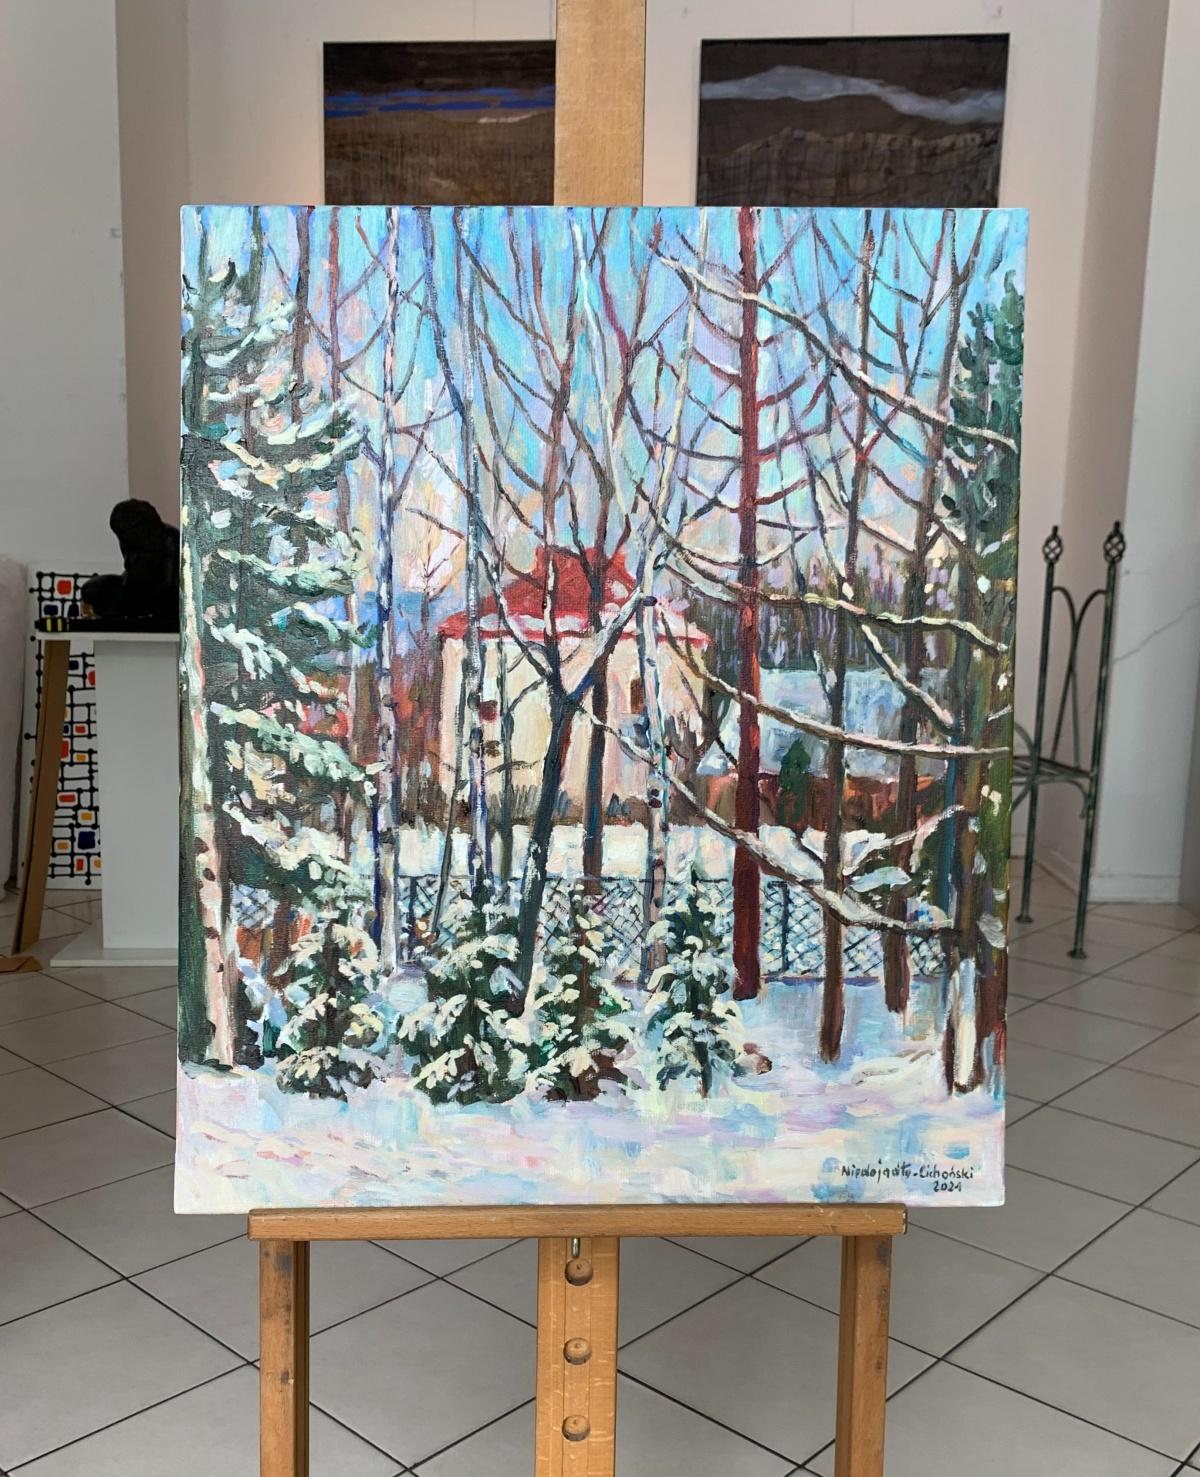 In the winter sun - Oil painting, Colourful, Vertcal, Trees - Painting by Marek Niedojadło